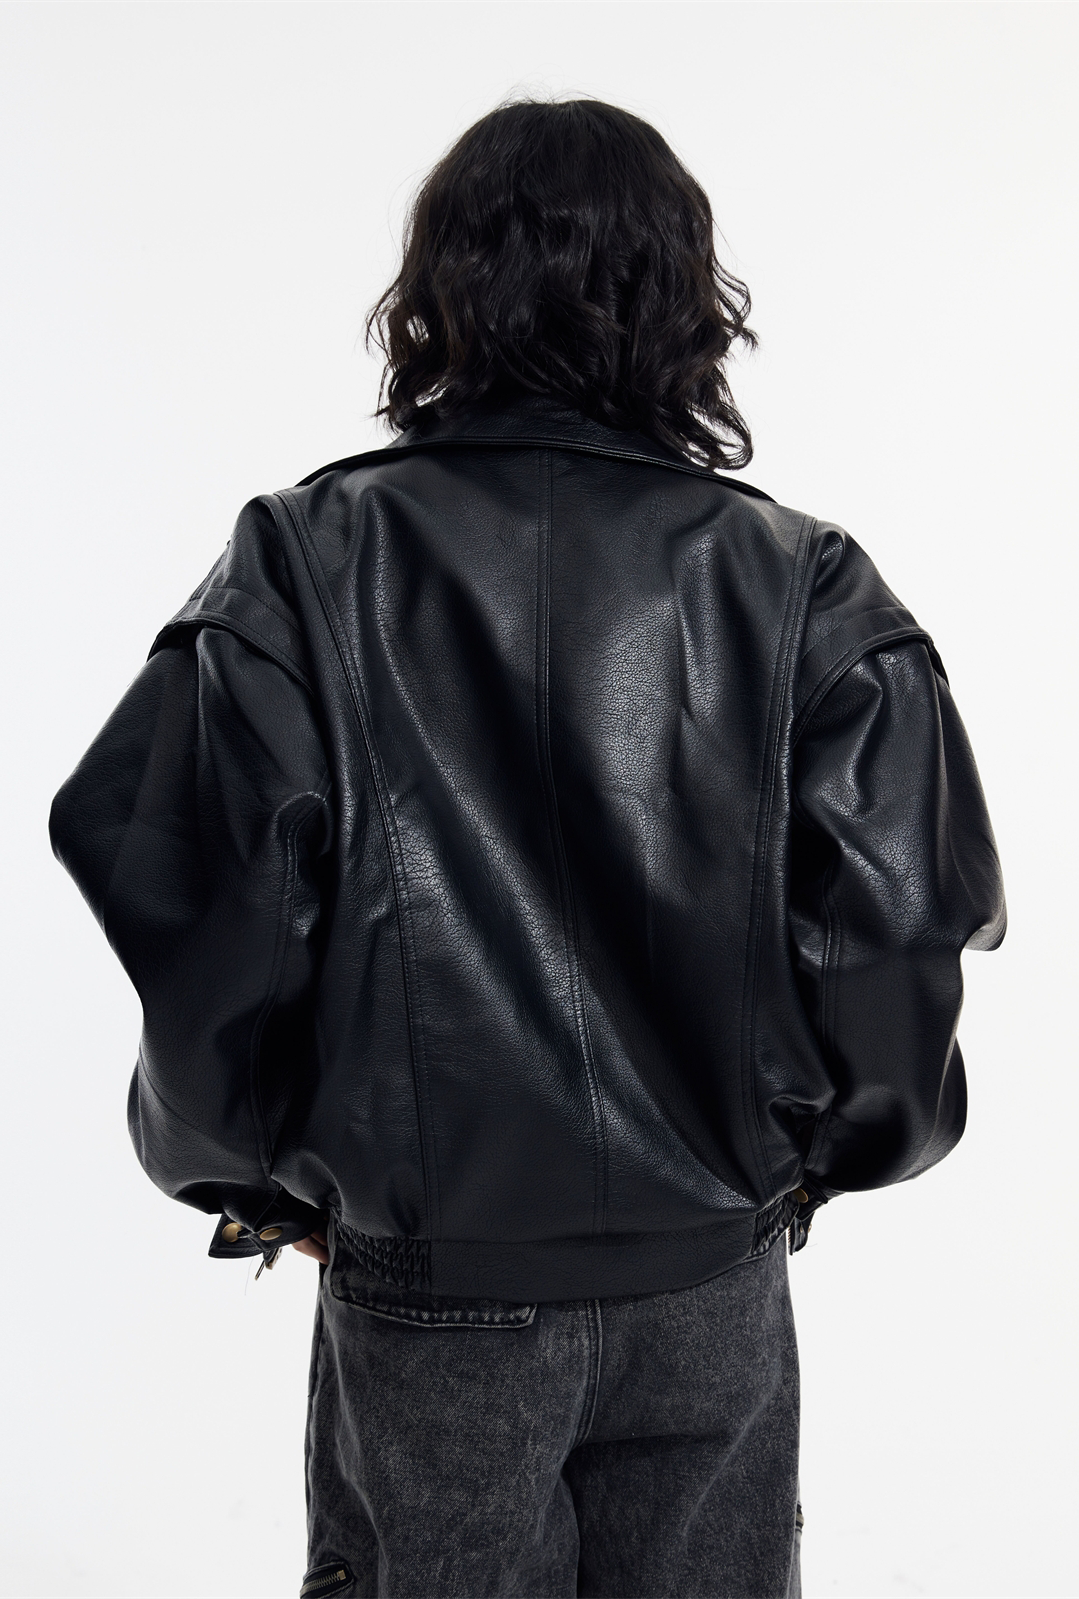 Ramone Taxi Leather Jacket